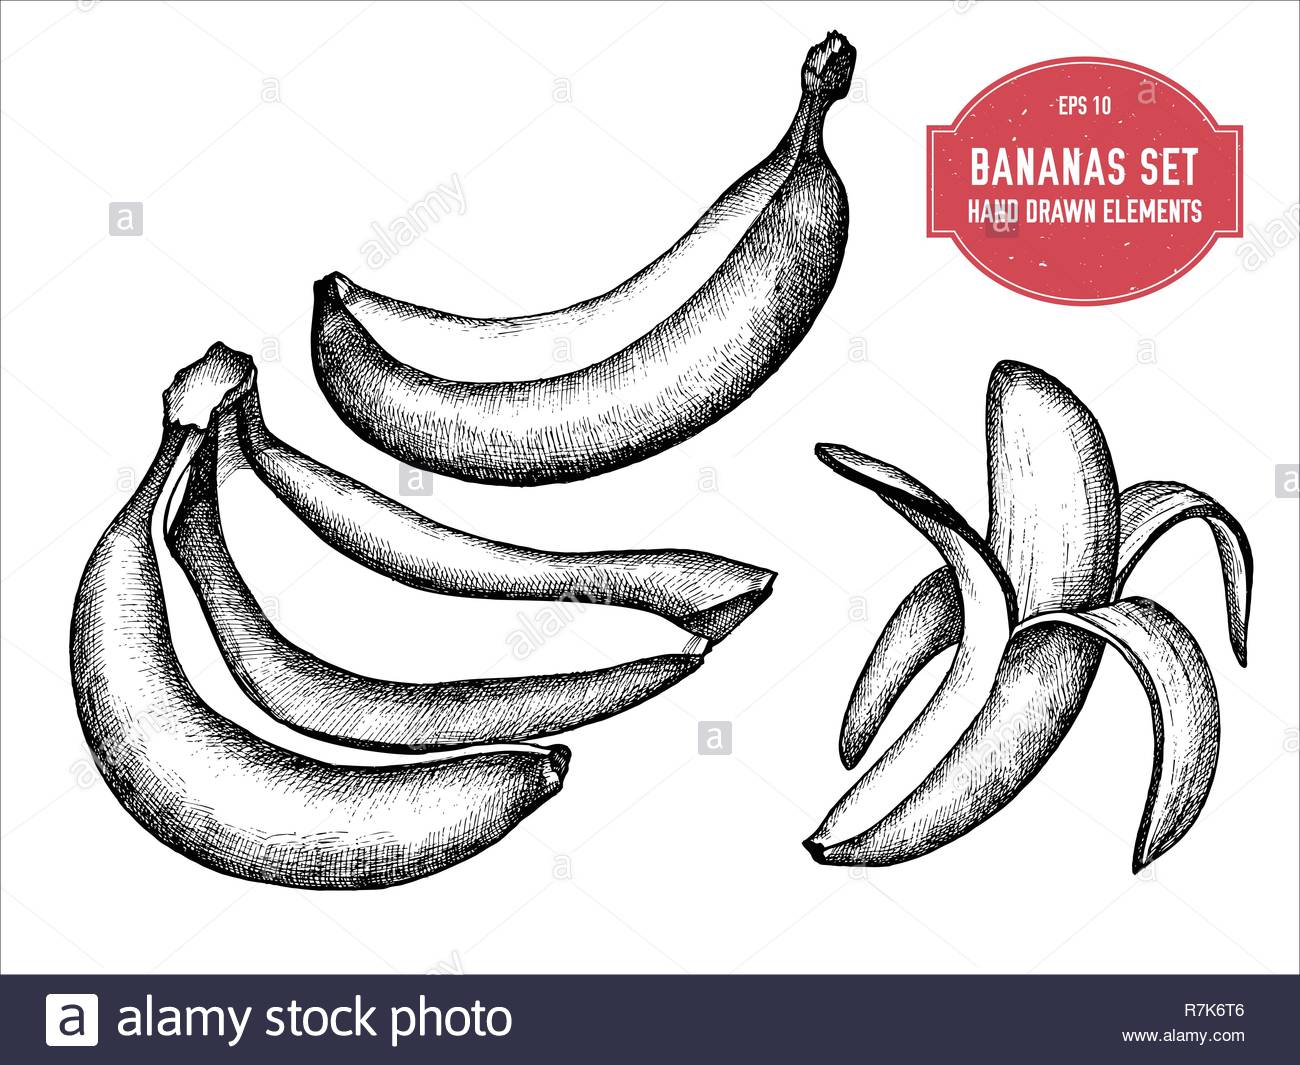 Black Bananas Stock Photos & Black Bananas Stock Images - Alamy